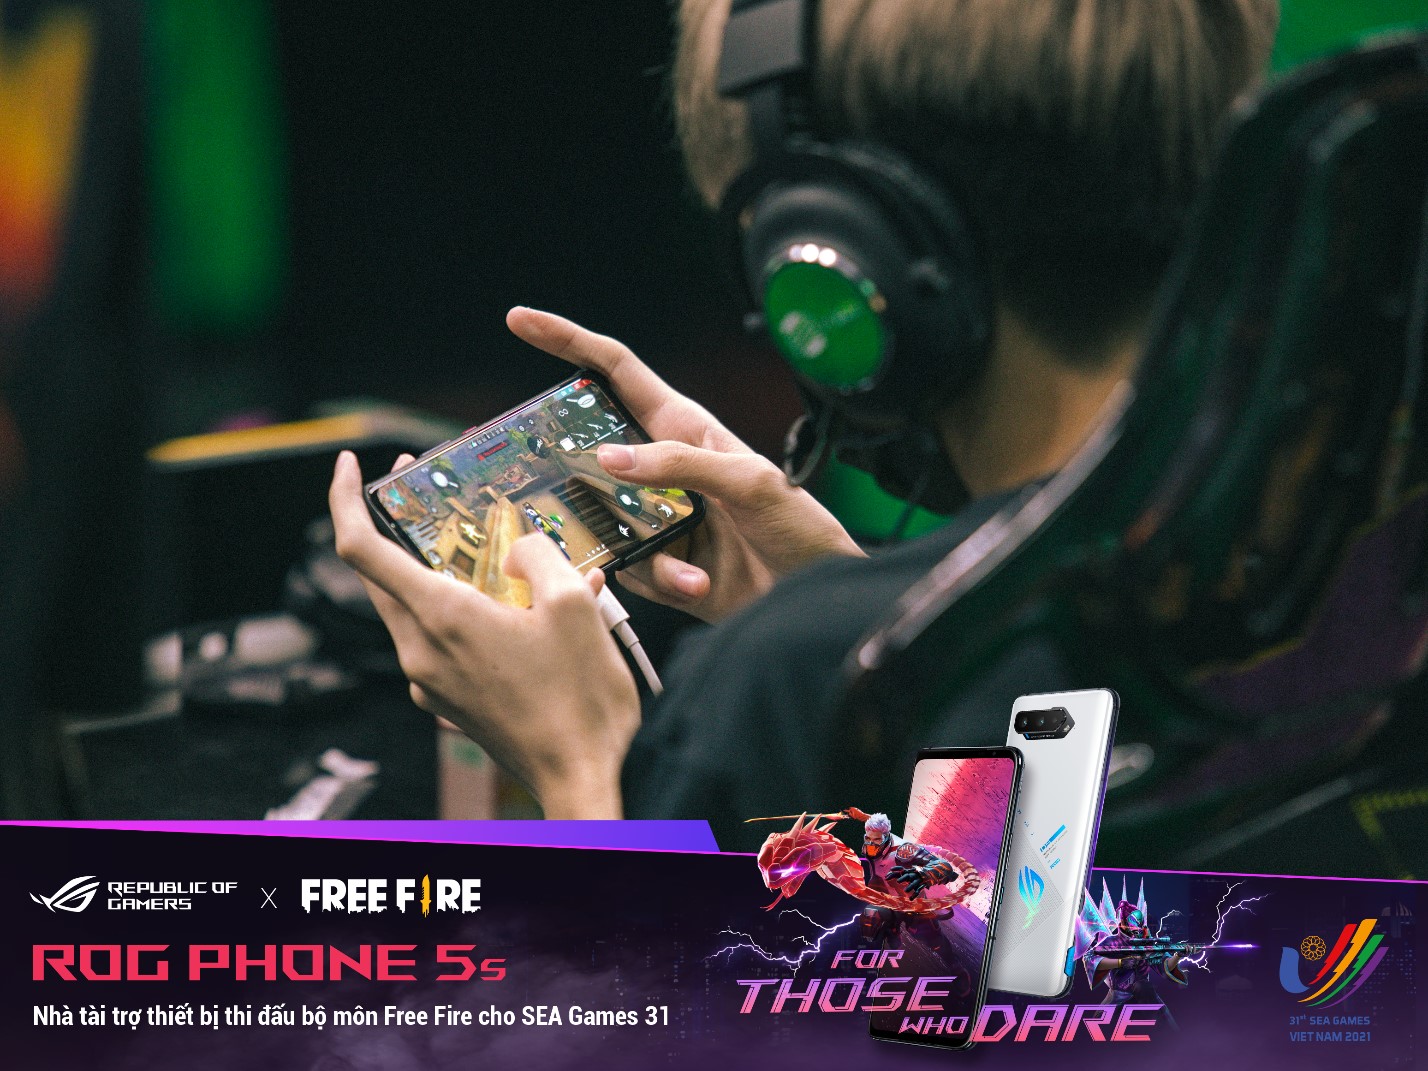 ROG-Phone-5s-FreeFire-Seagames-31.jpg